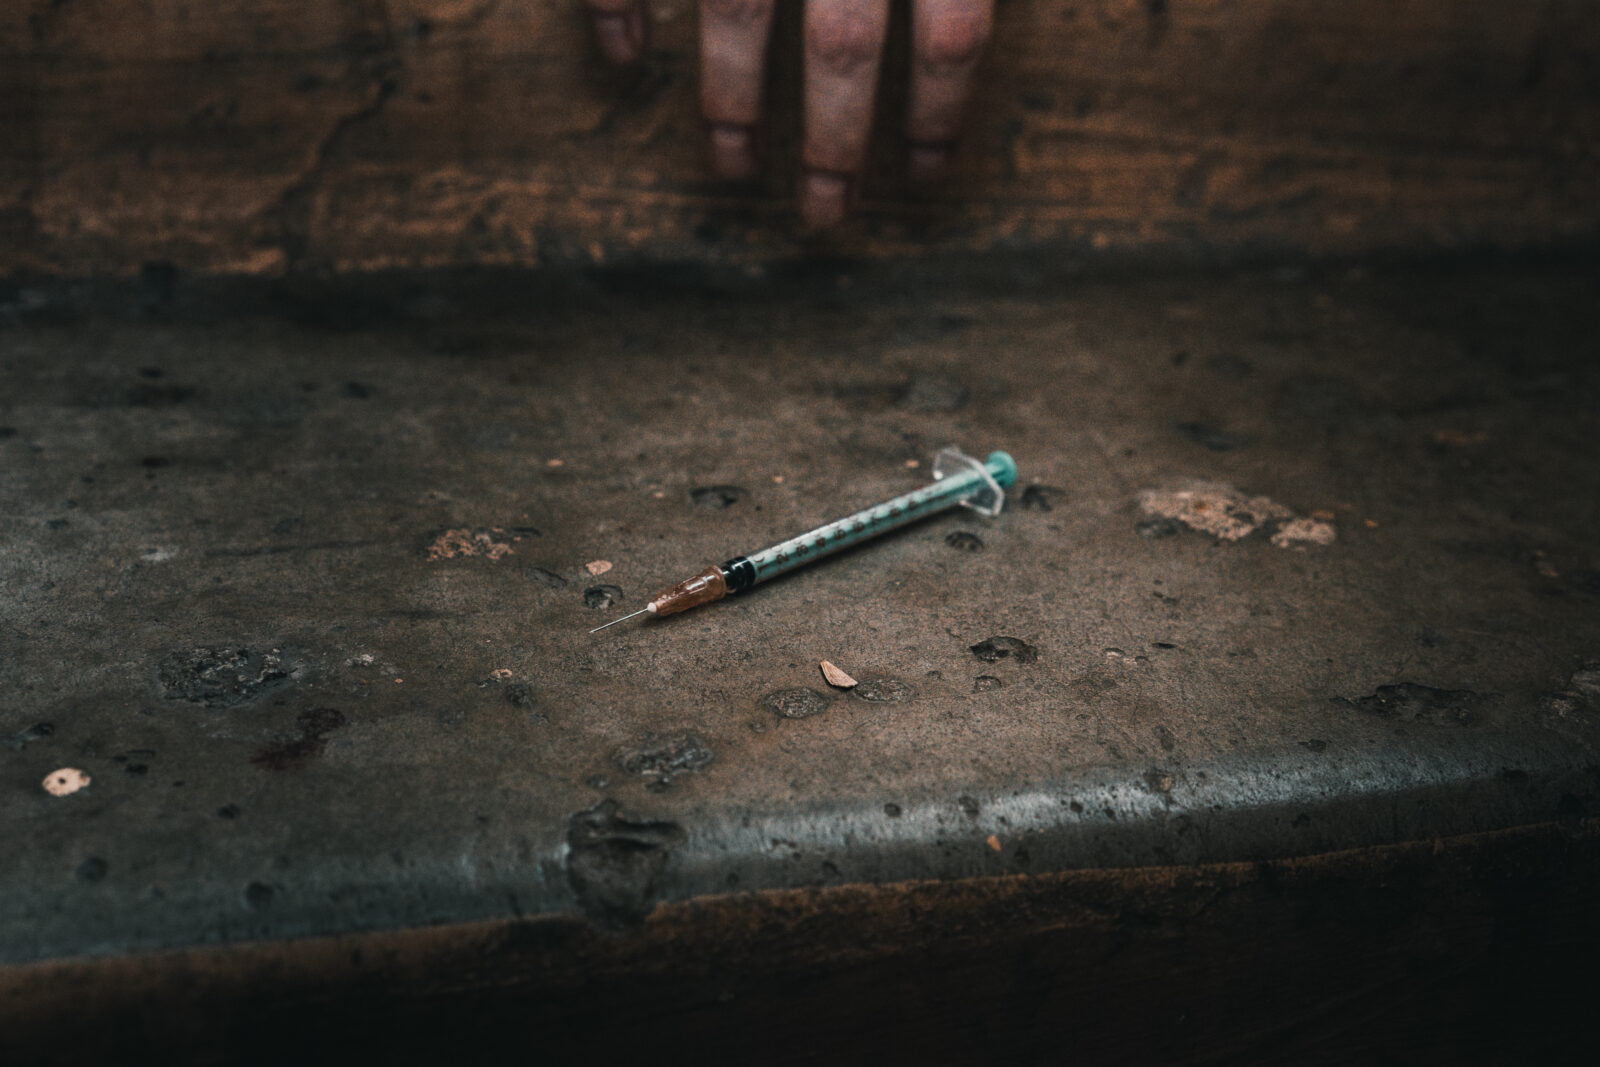 Heroin syringe on rough concrete